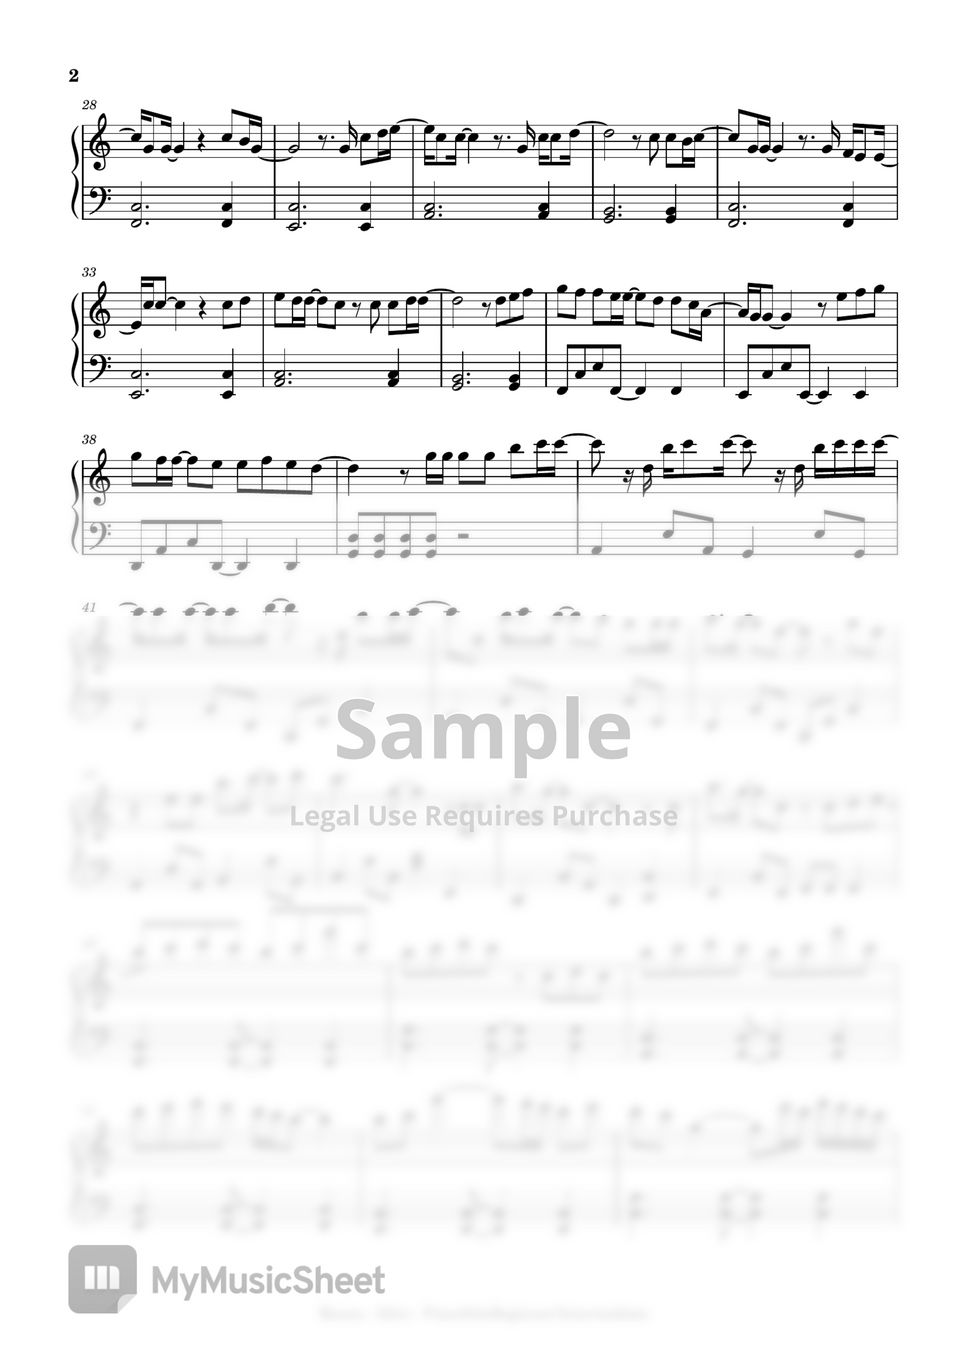 ReoNa - Alive (beginner to intermediate, piano) by Mopianic